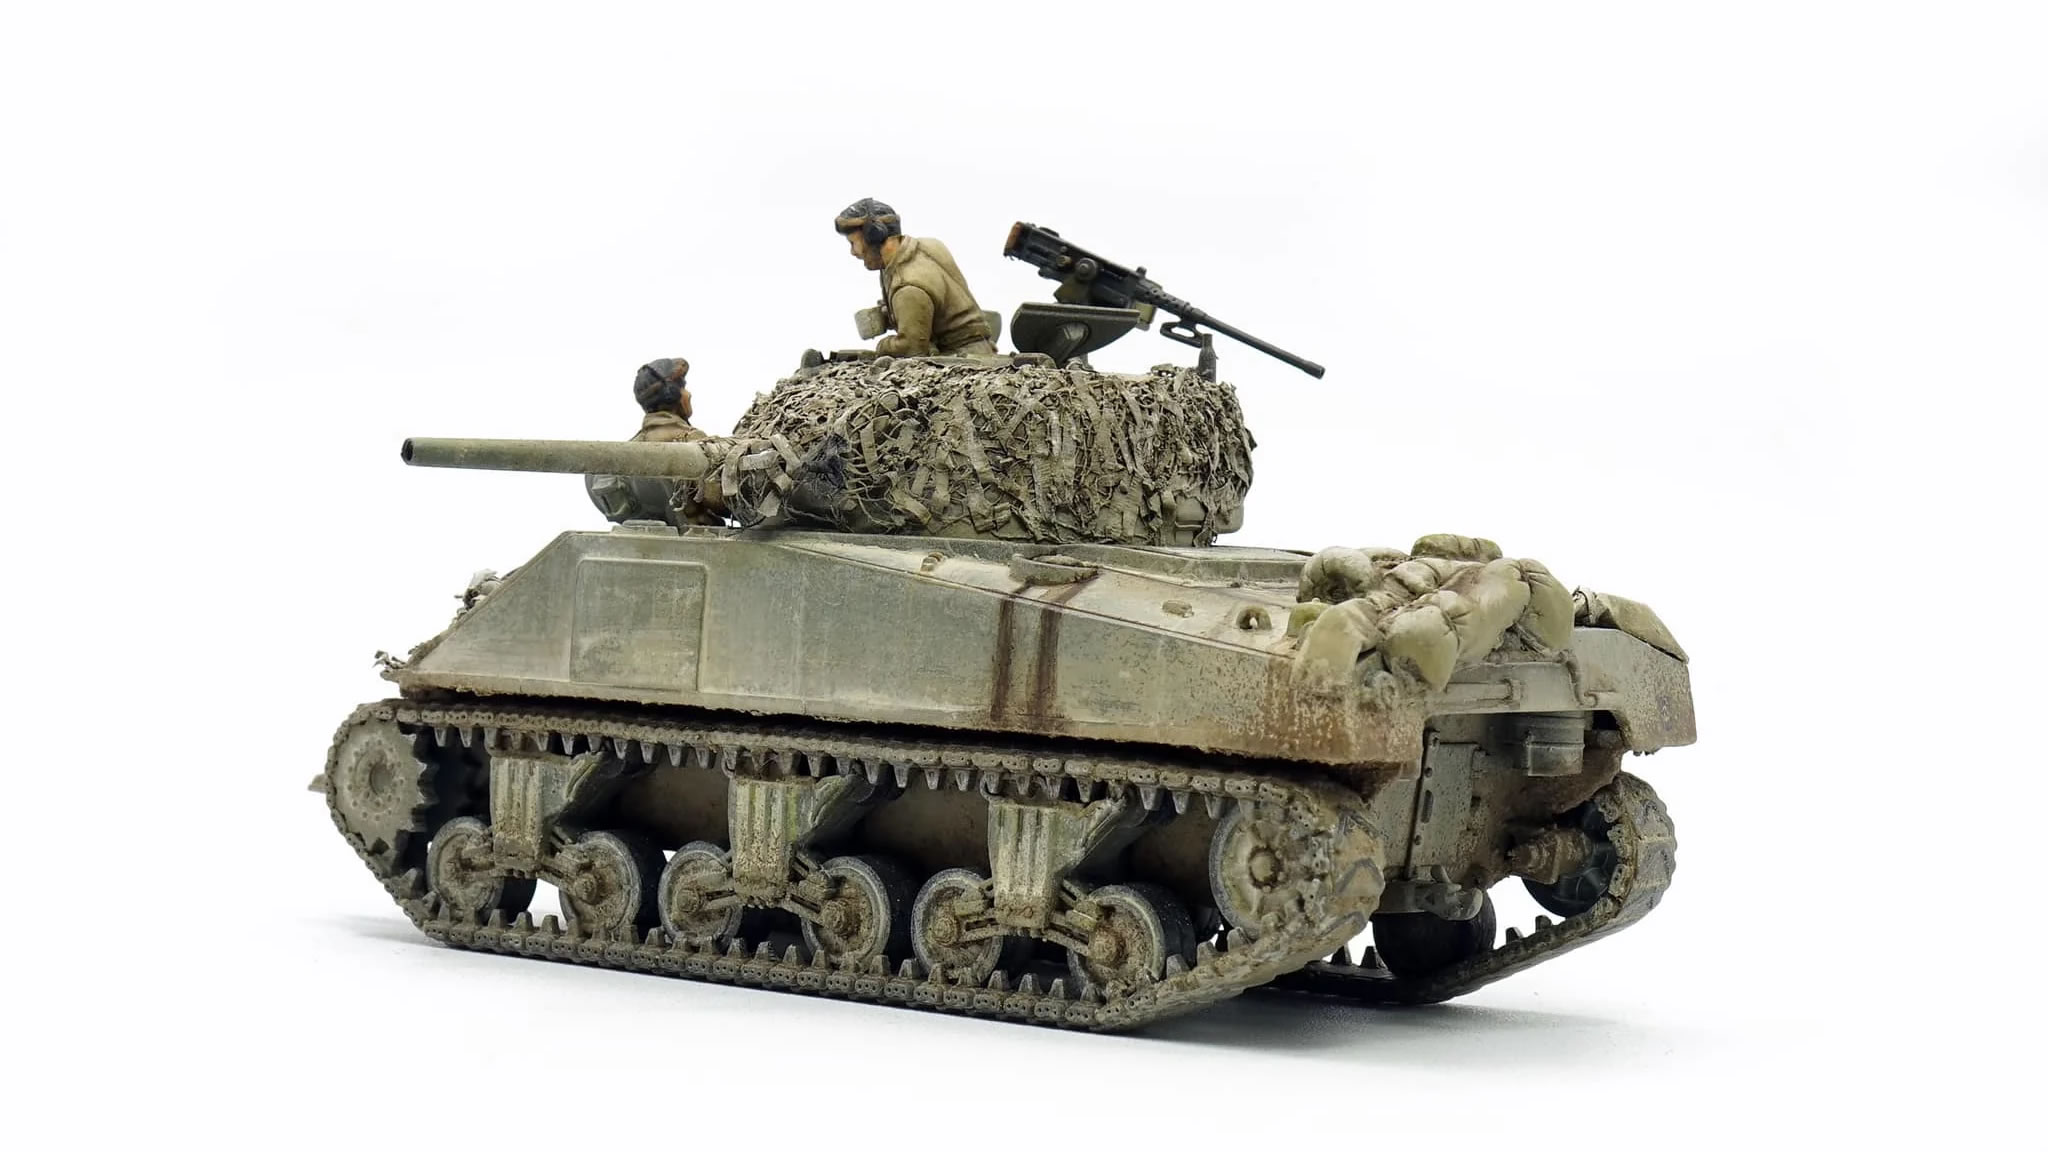 Rubicon Models 1/56 M4 Sherman / Firefly IC # 280060